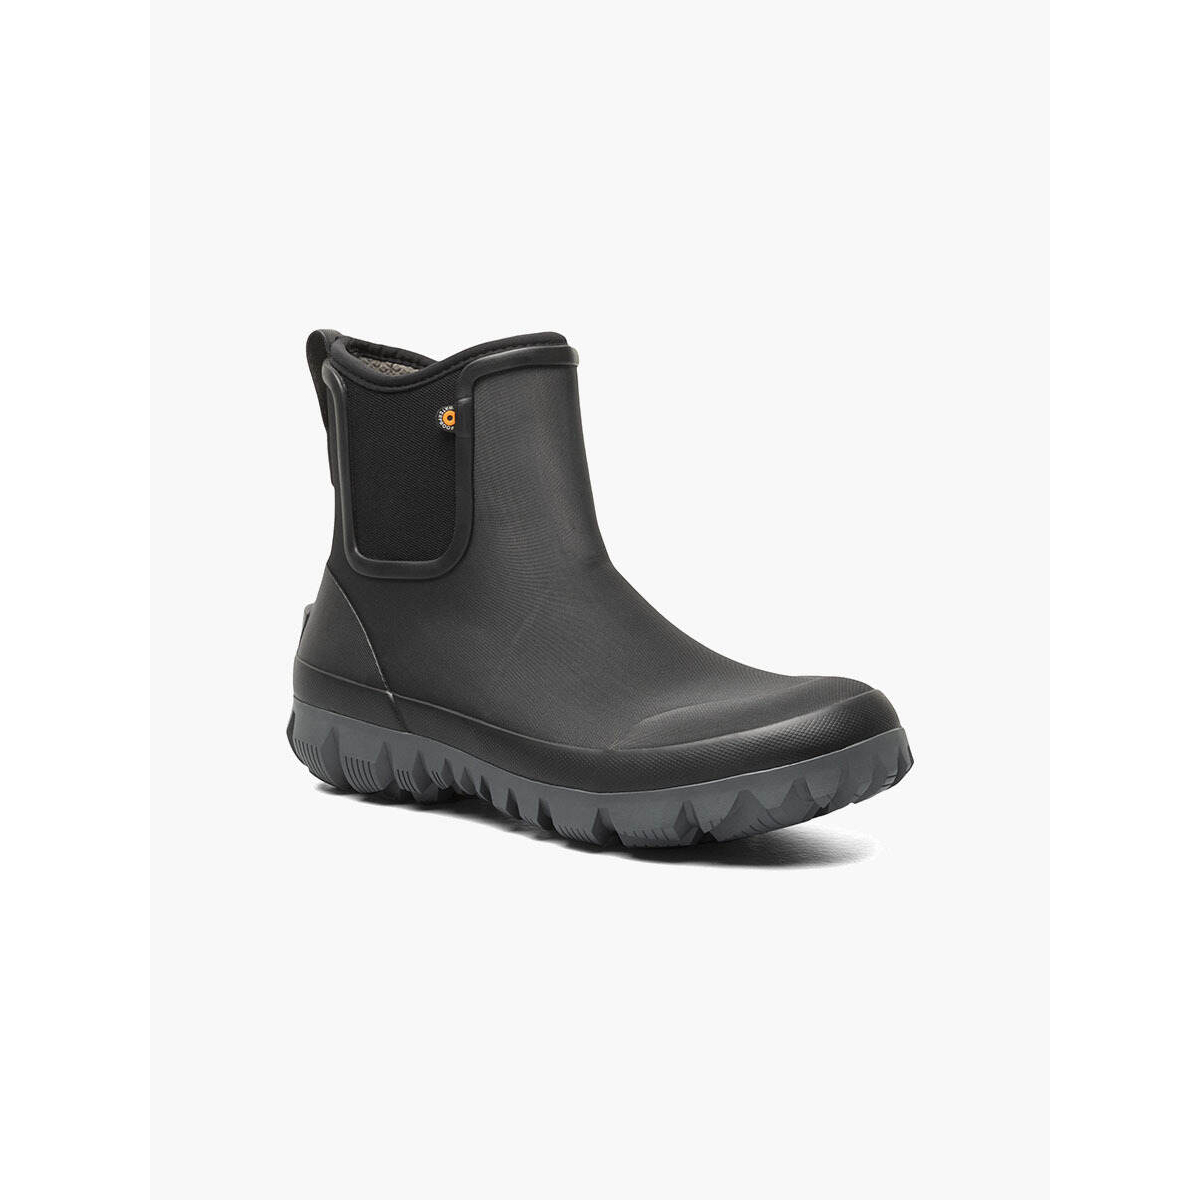 BOGS Men's Acrata Urban Chelsea Winter Boots Black - 72910-001 BLACK - BLACK, 9